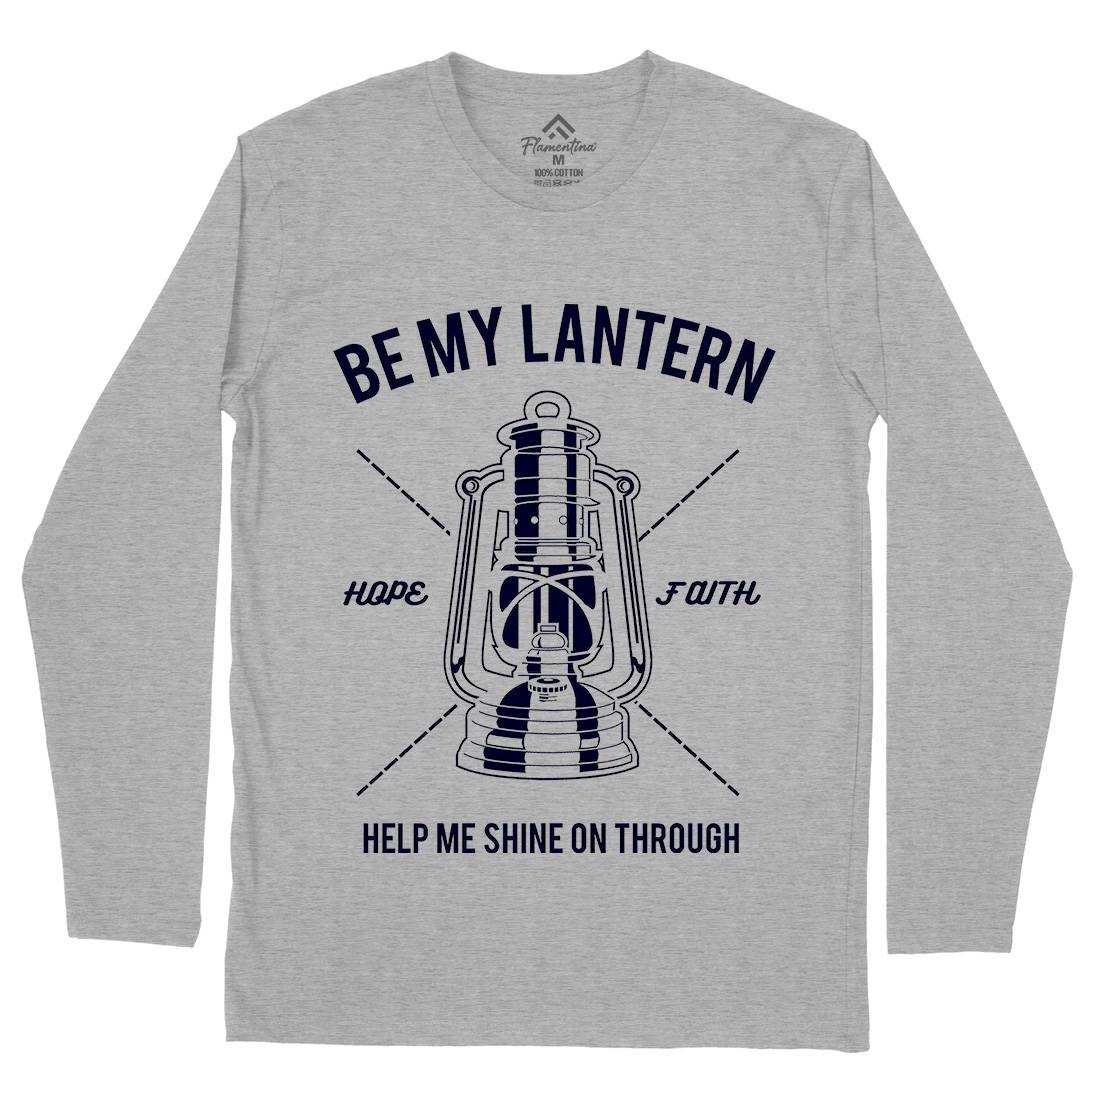 Lantern Mens Long Sleeve T-Shirt Religion A081